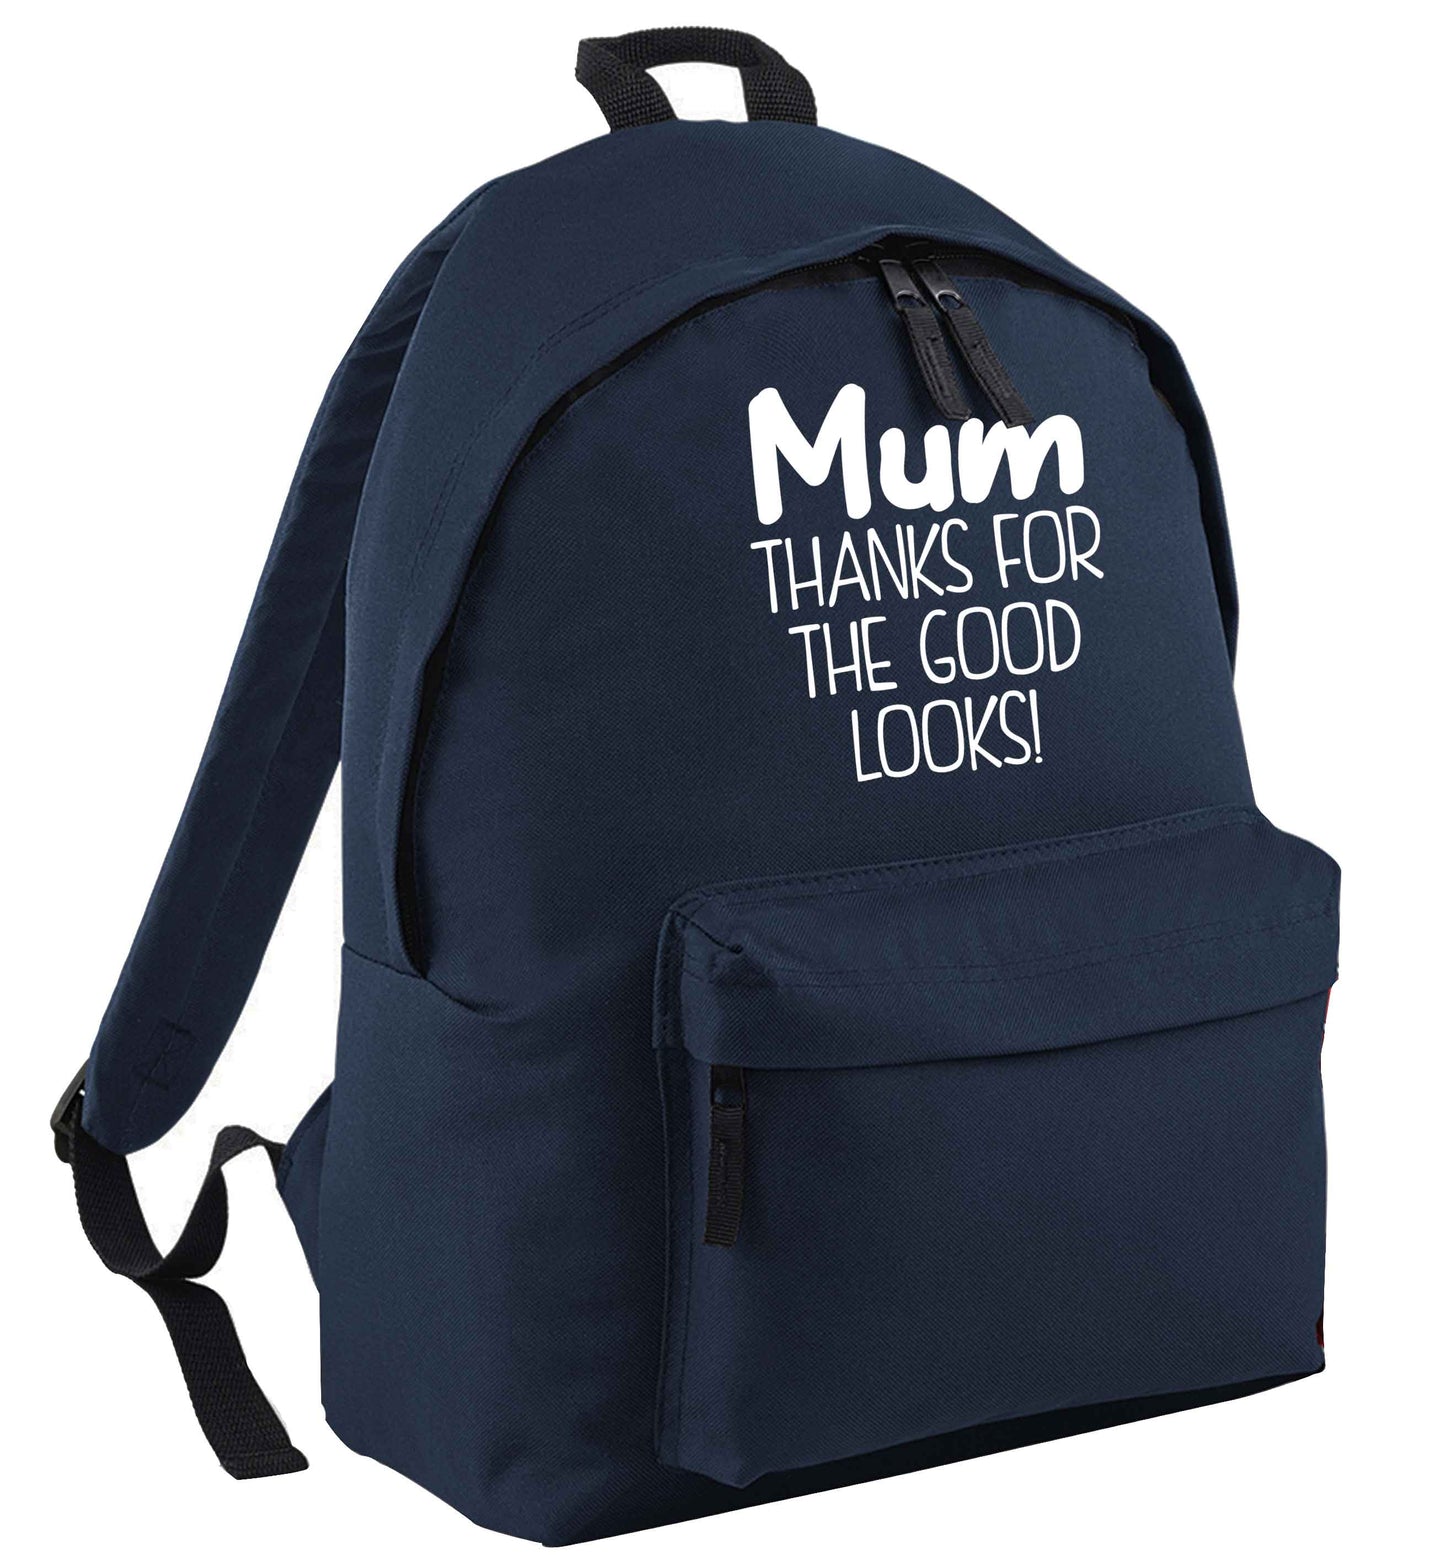 Mum thanks for the good looks! navy childrens backpack